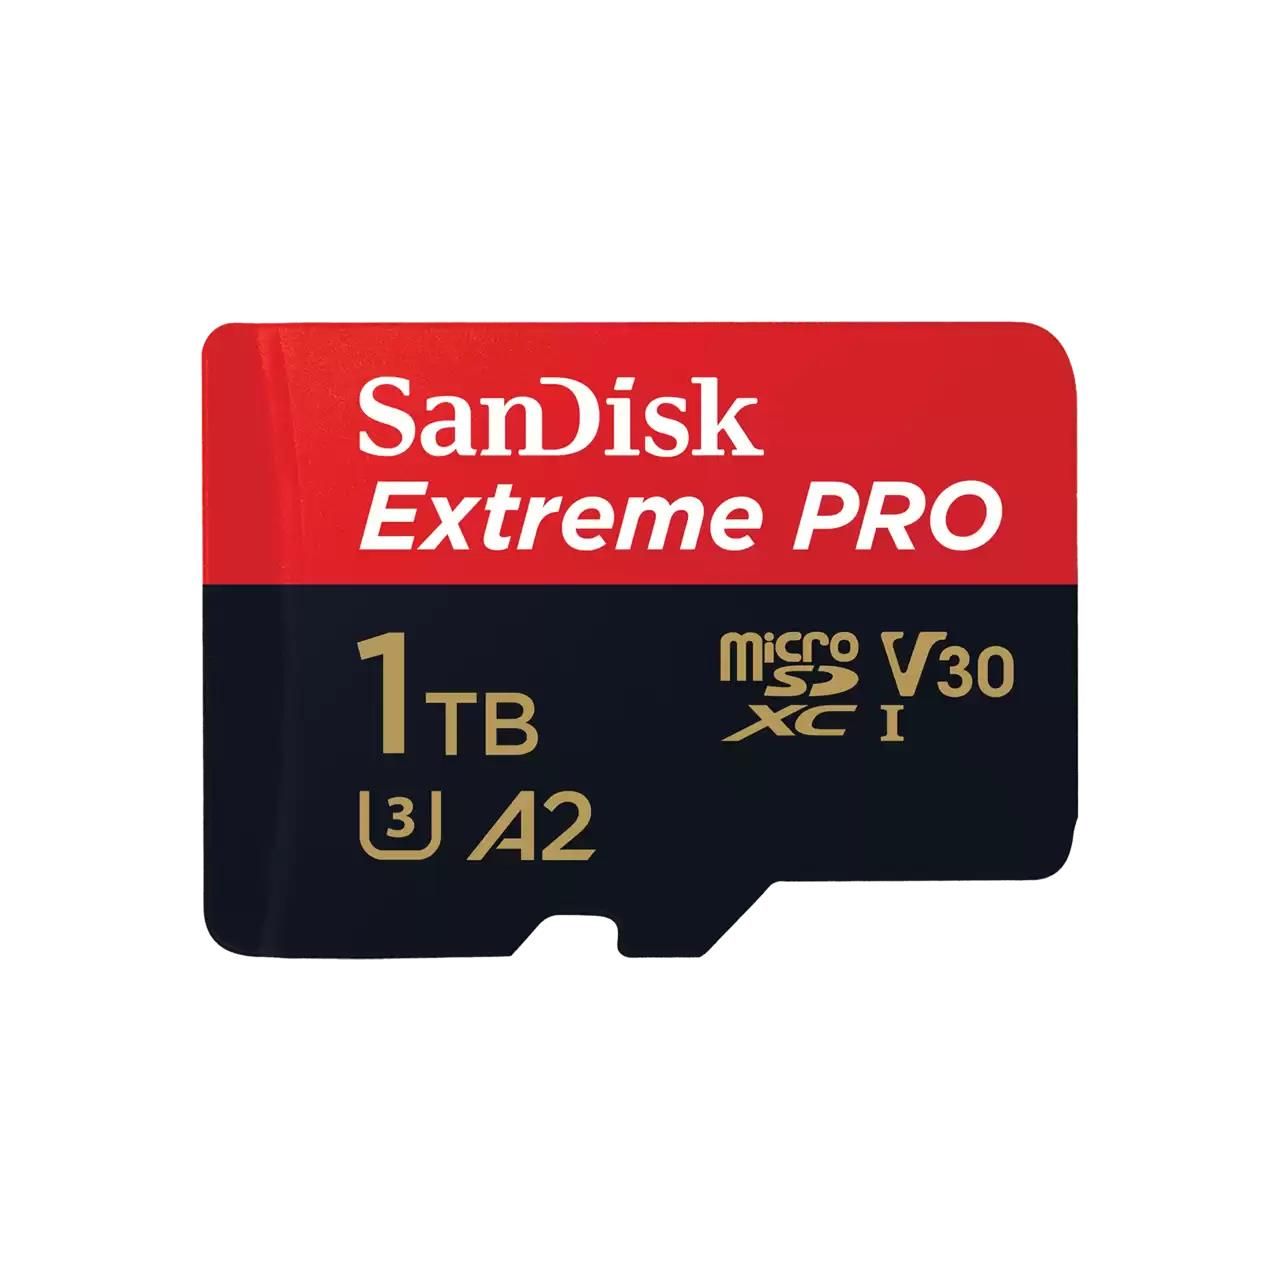 SanDisk Extreme PRO 1Tb